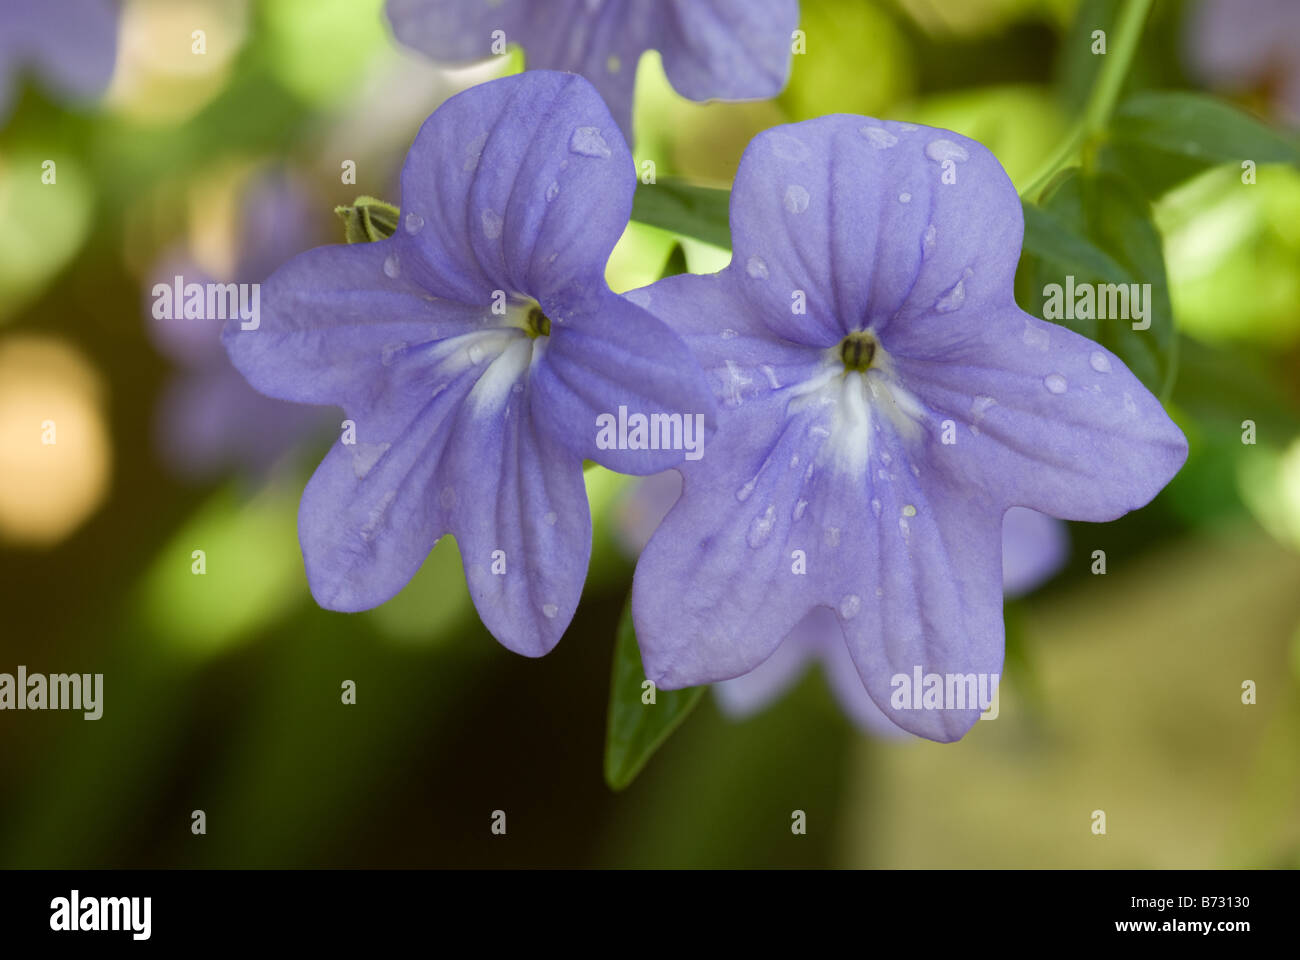 American Bush Violet  (Browallia speciosa, Solanaceae) flowers Stock Photo